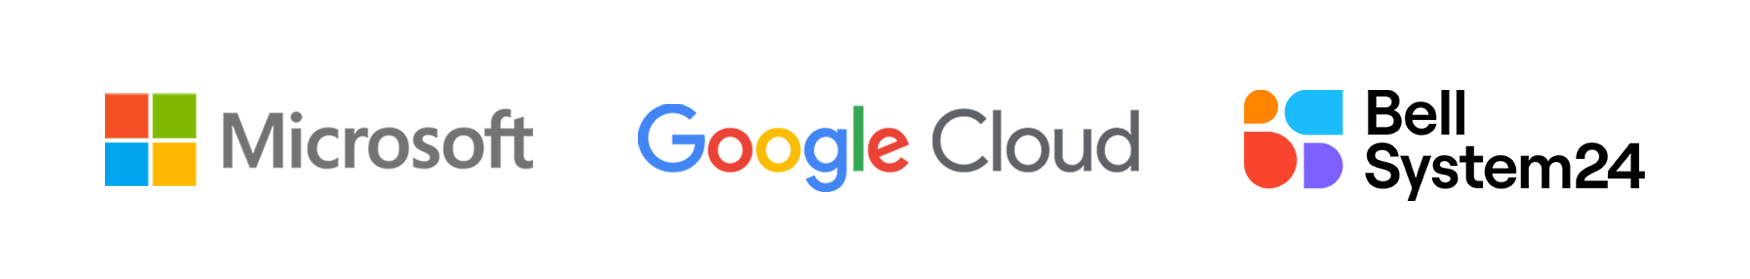 Microsoft / Google Cloud / BELLSYSTEM24 Logos